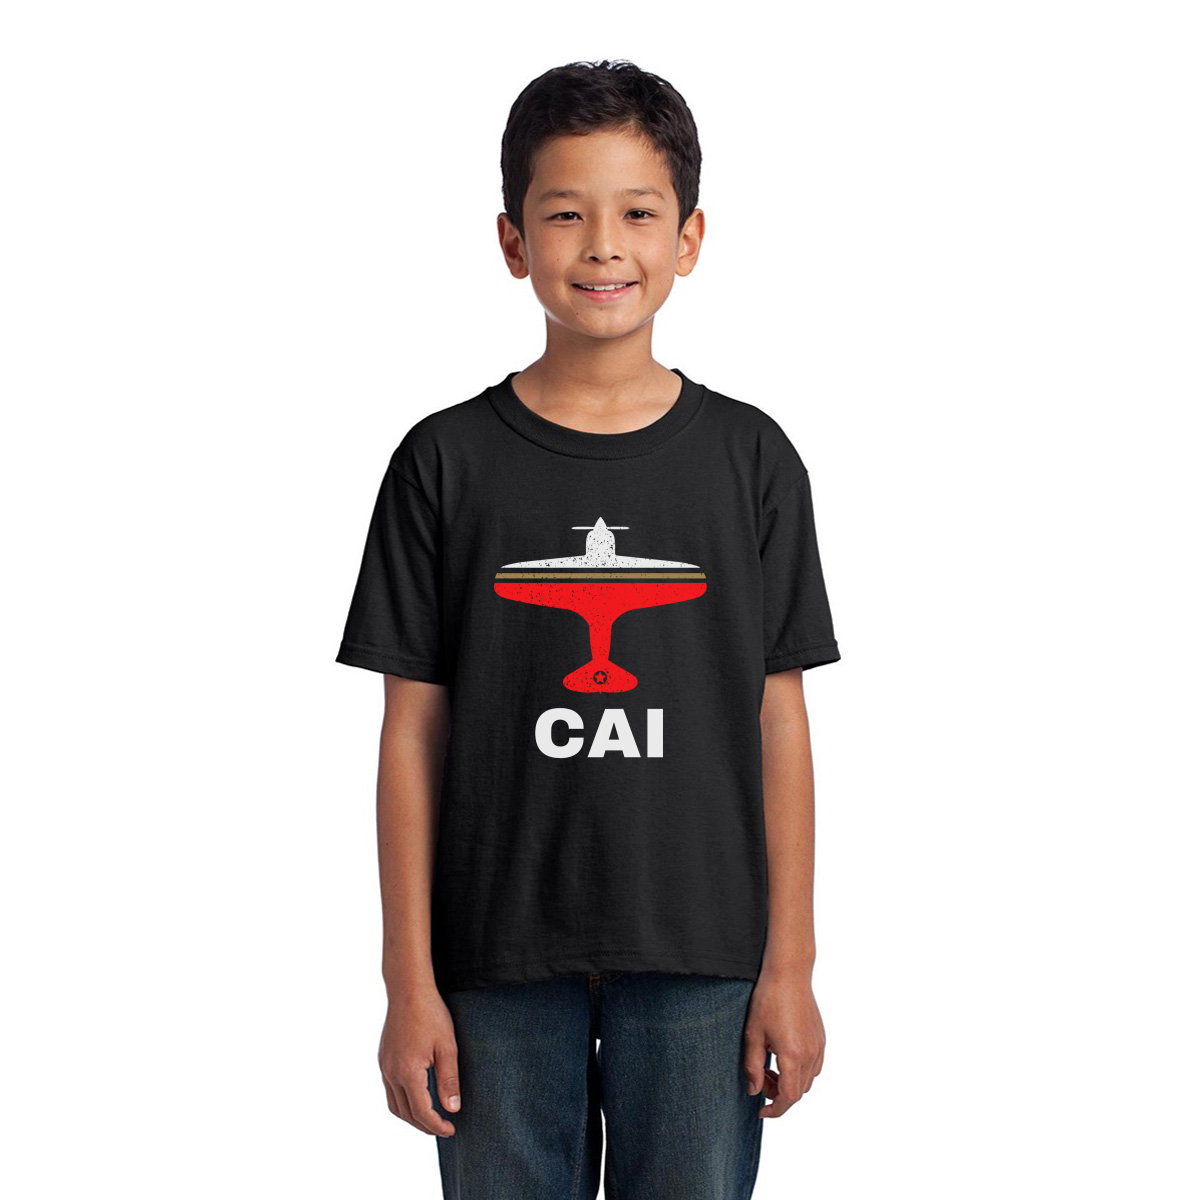 Fly Cairo CAI Airport Kids T-shirt | Black